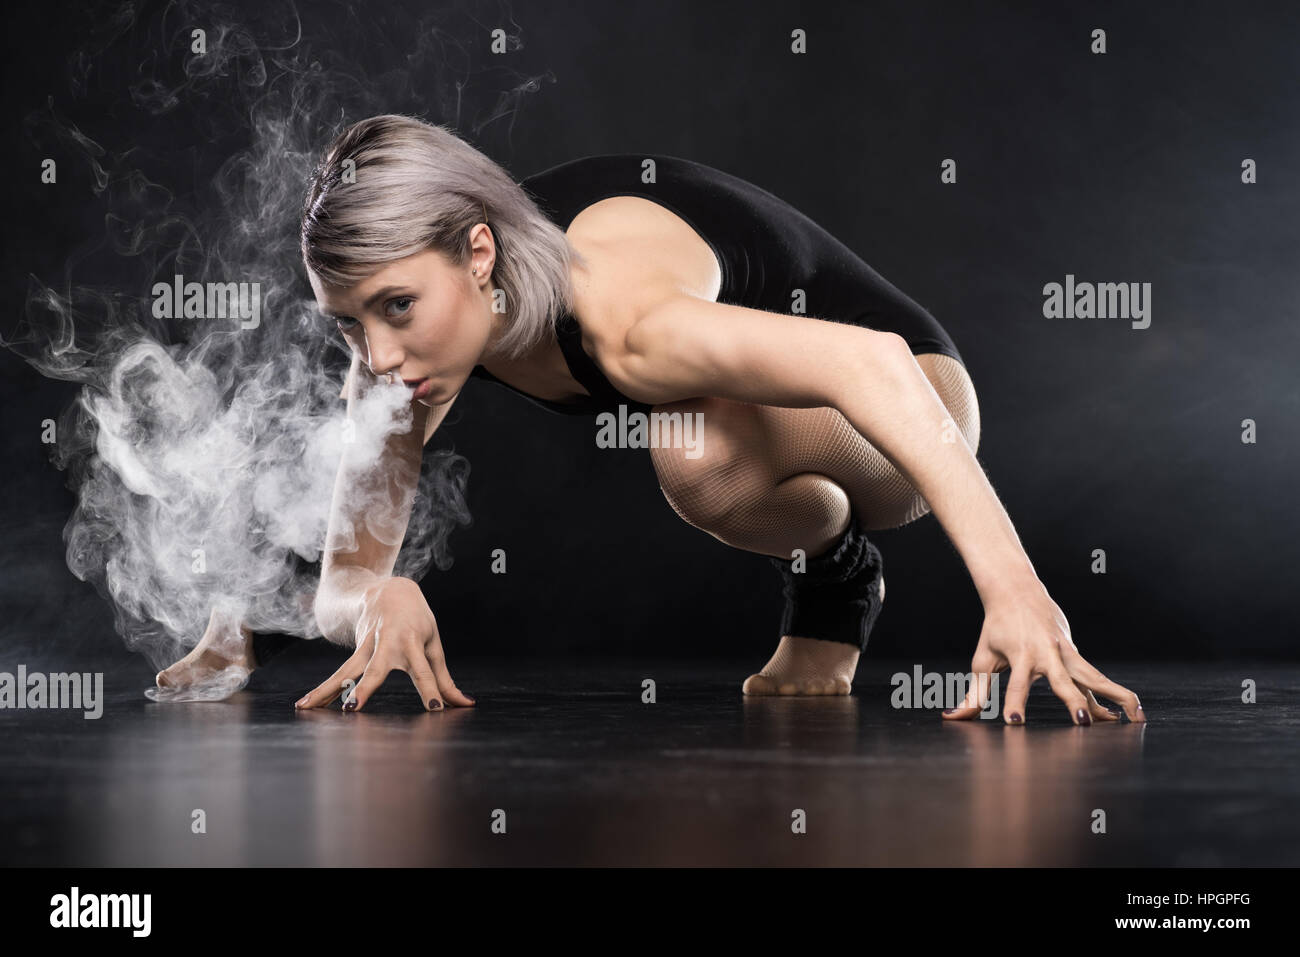 woman in bodysuit exhaling smoke Stock Photo